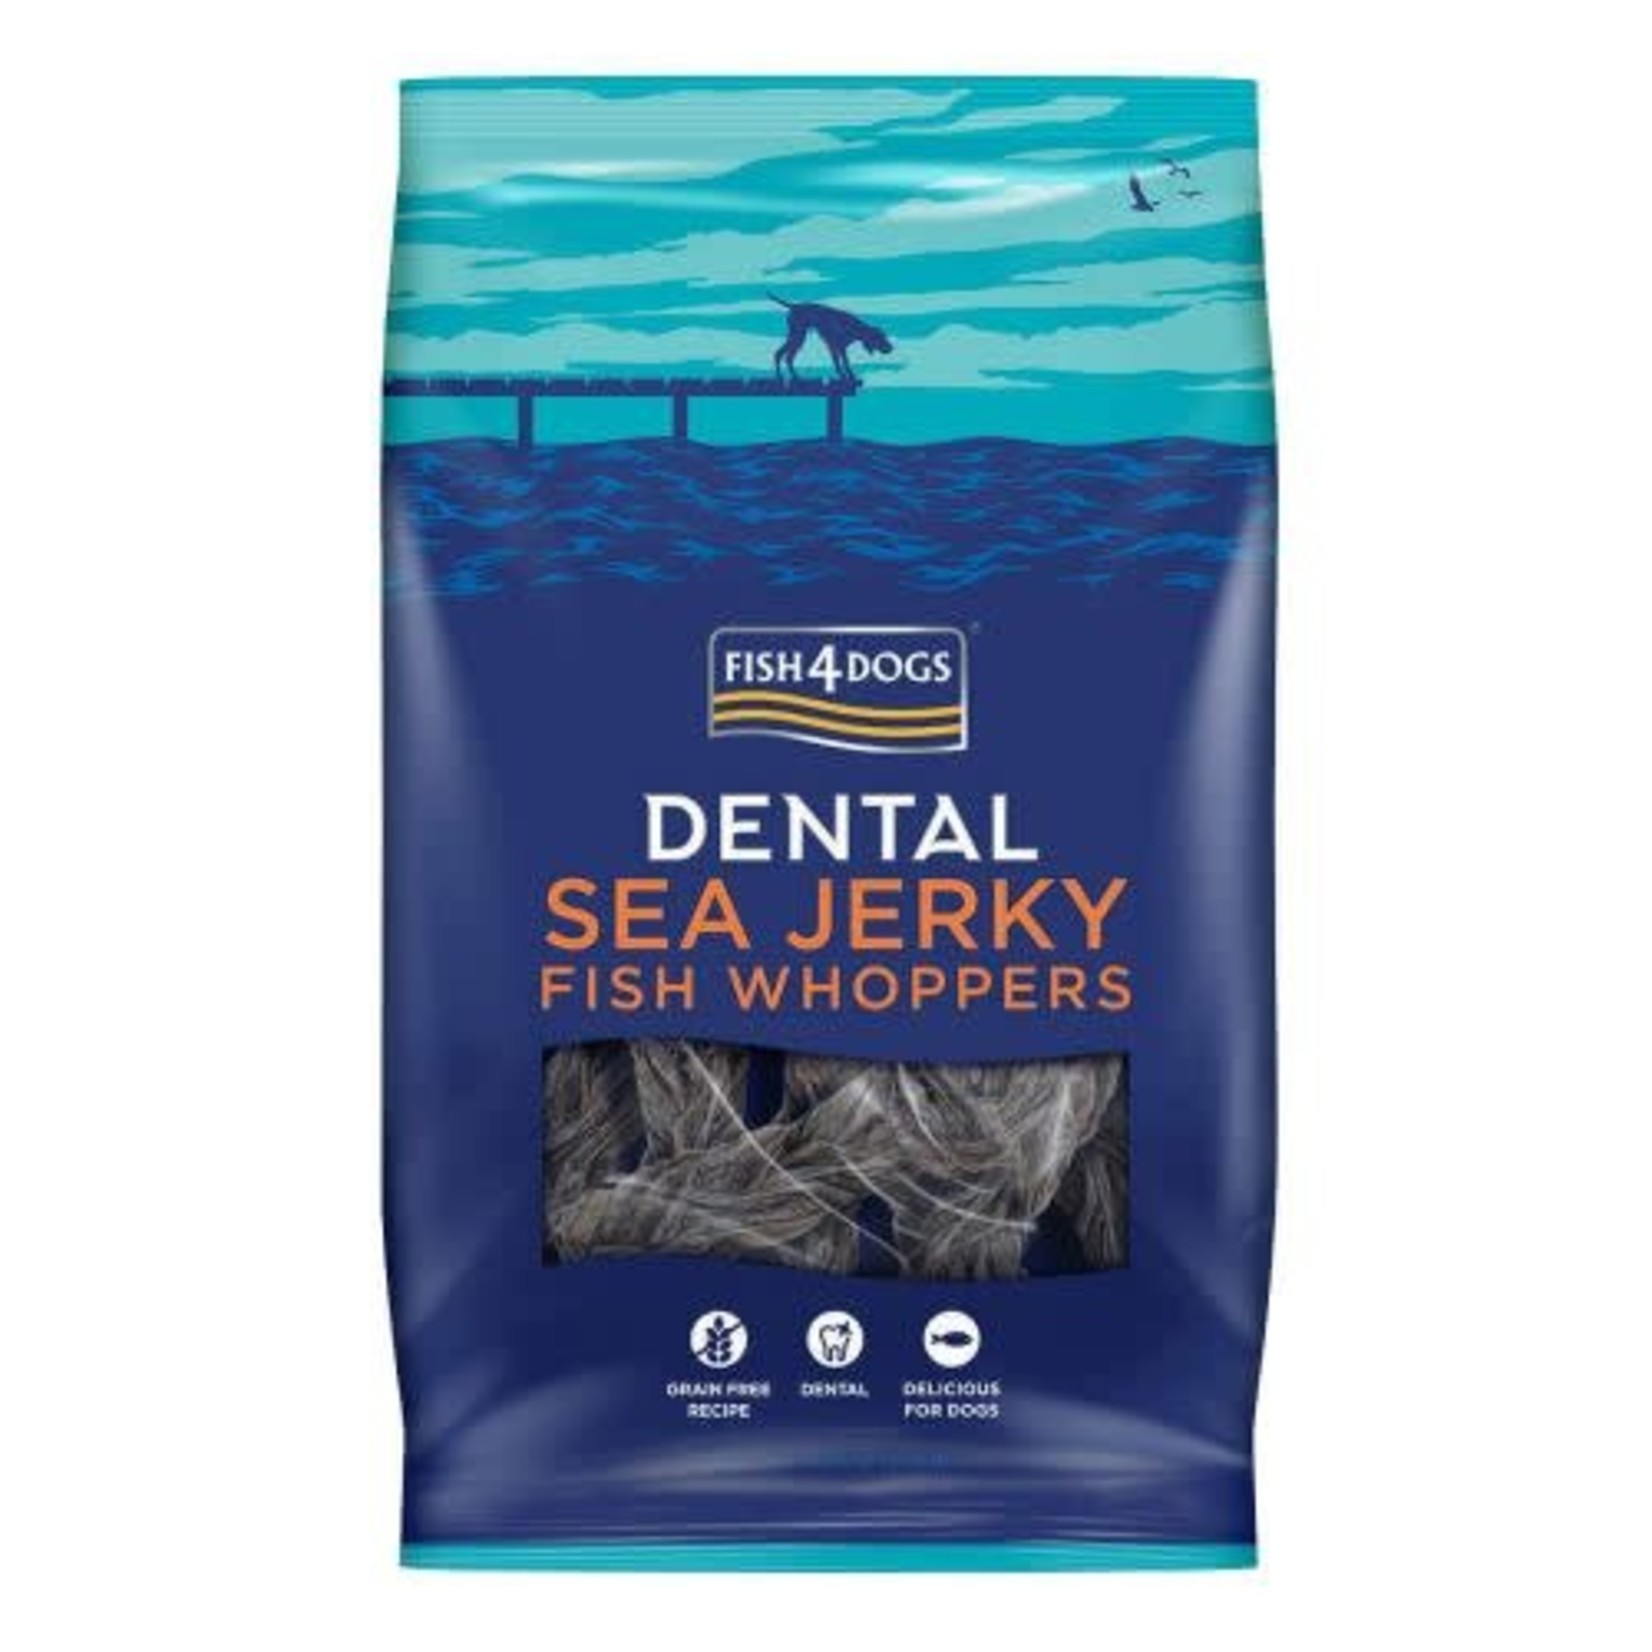 Fish4Dogs Dental Sea Jerky Fish Whoppers Dog Chews, 500g